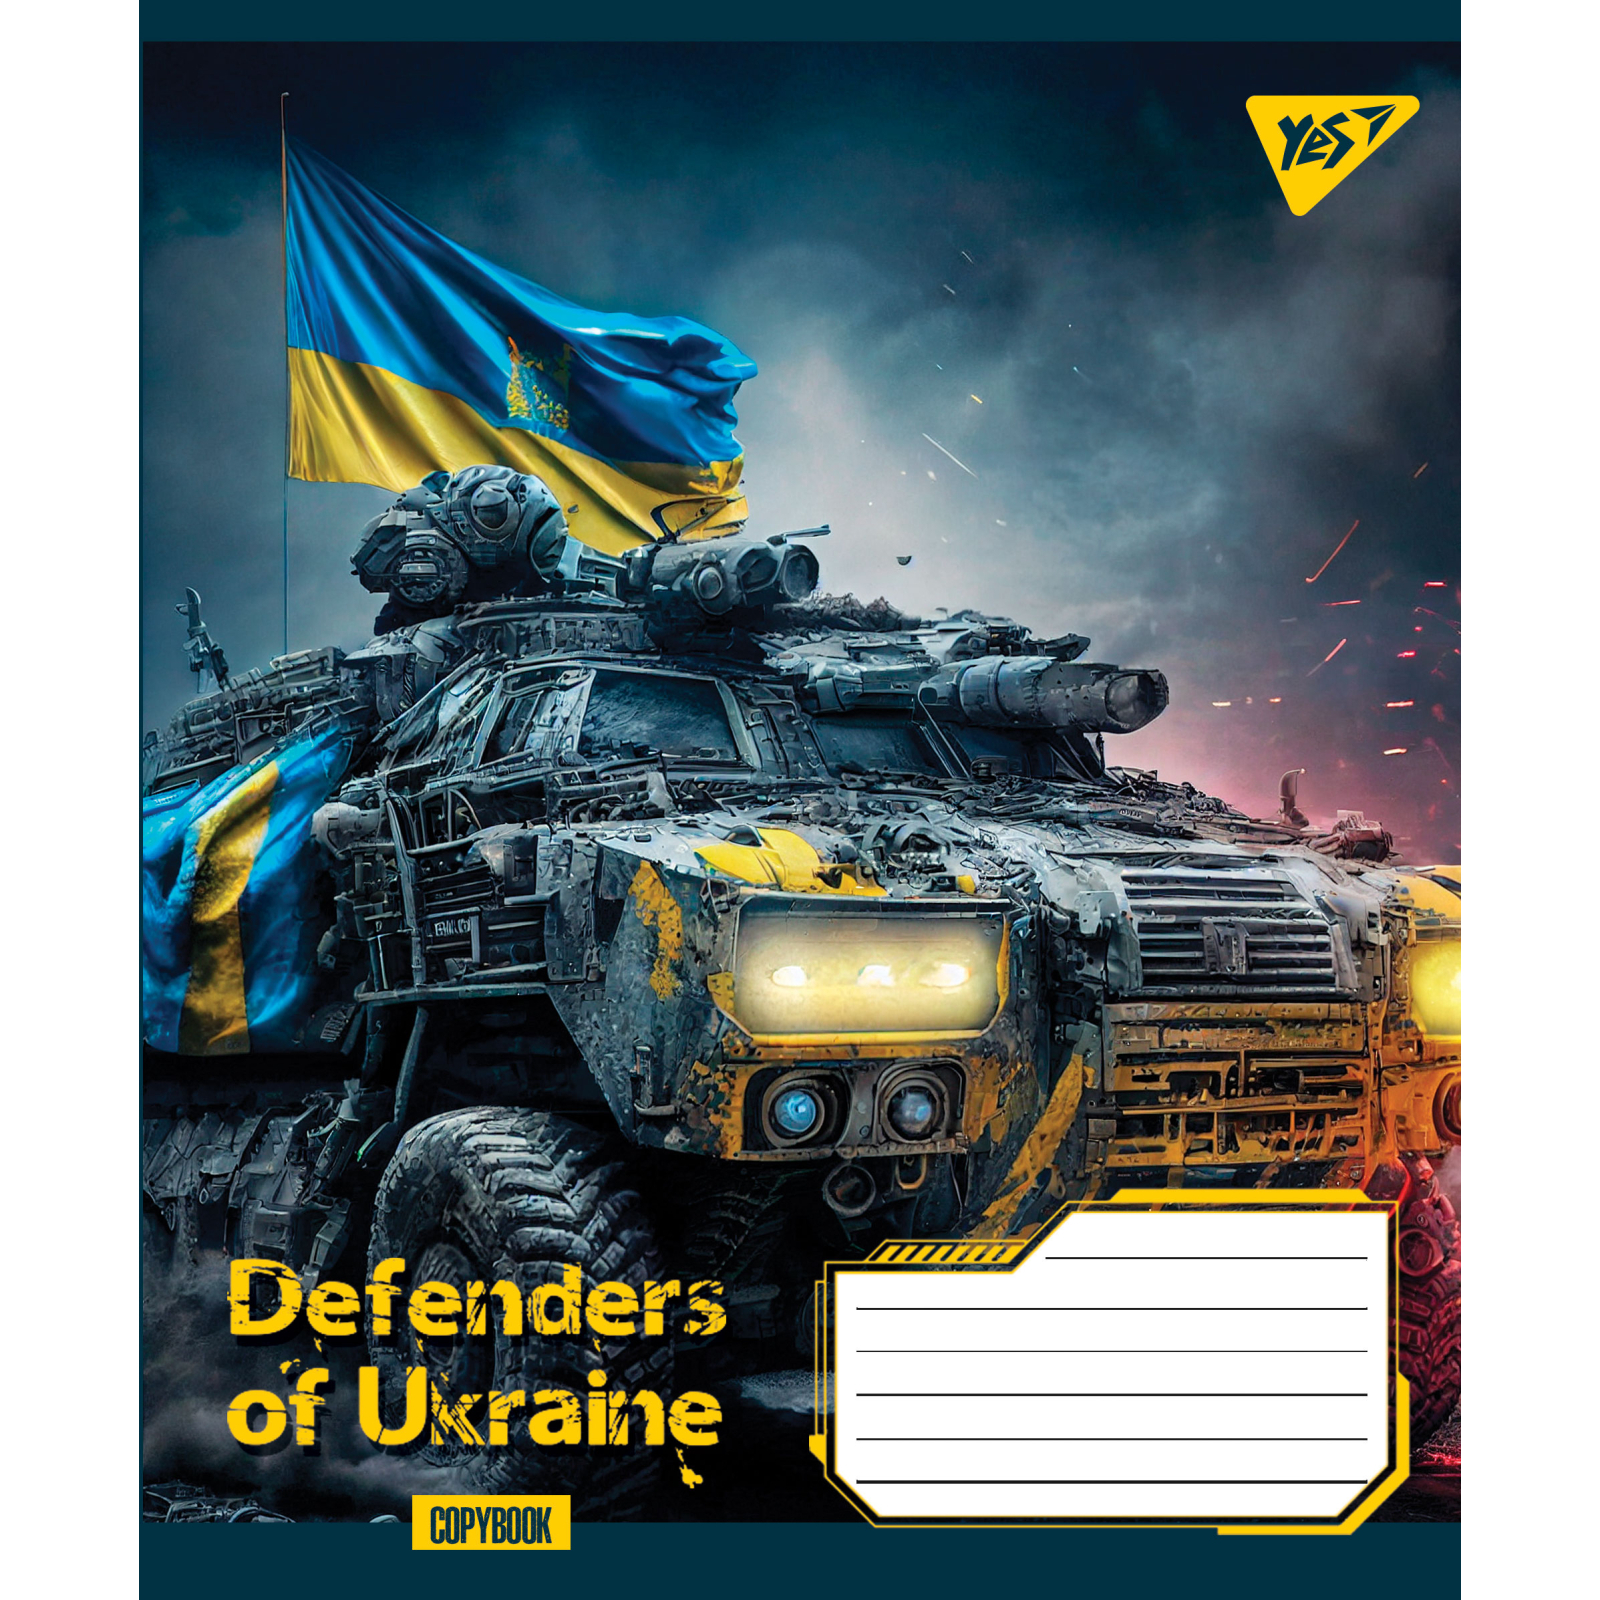 Тетрадь Yes А5 Defenders of Ukraine 60 листов, клетка (766469) изображение 3